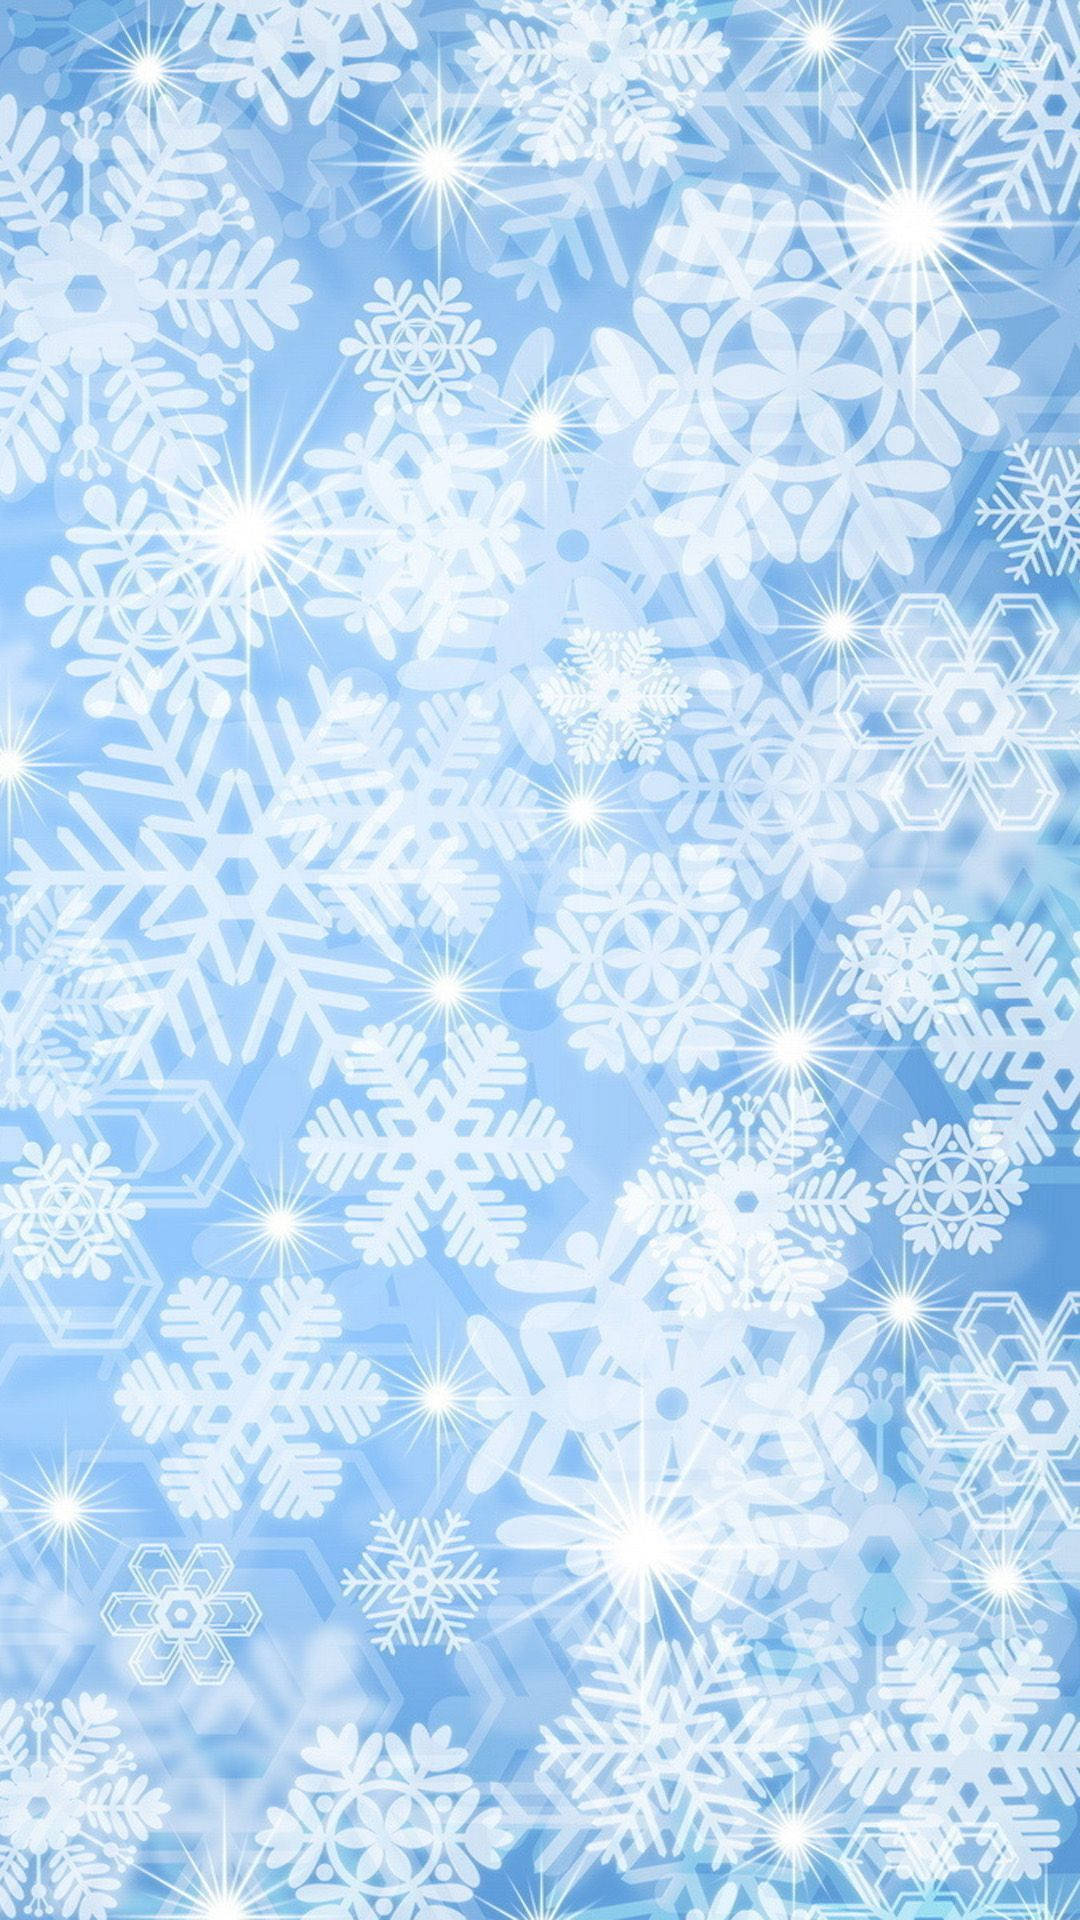 Download Snowflake Iphone Wallpaper | Wallpapers.com